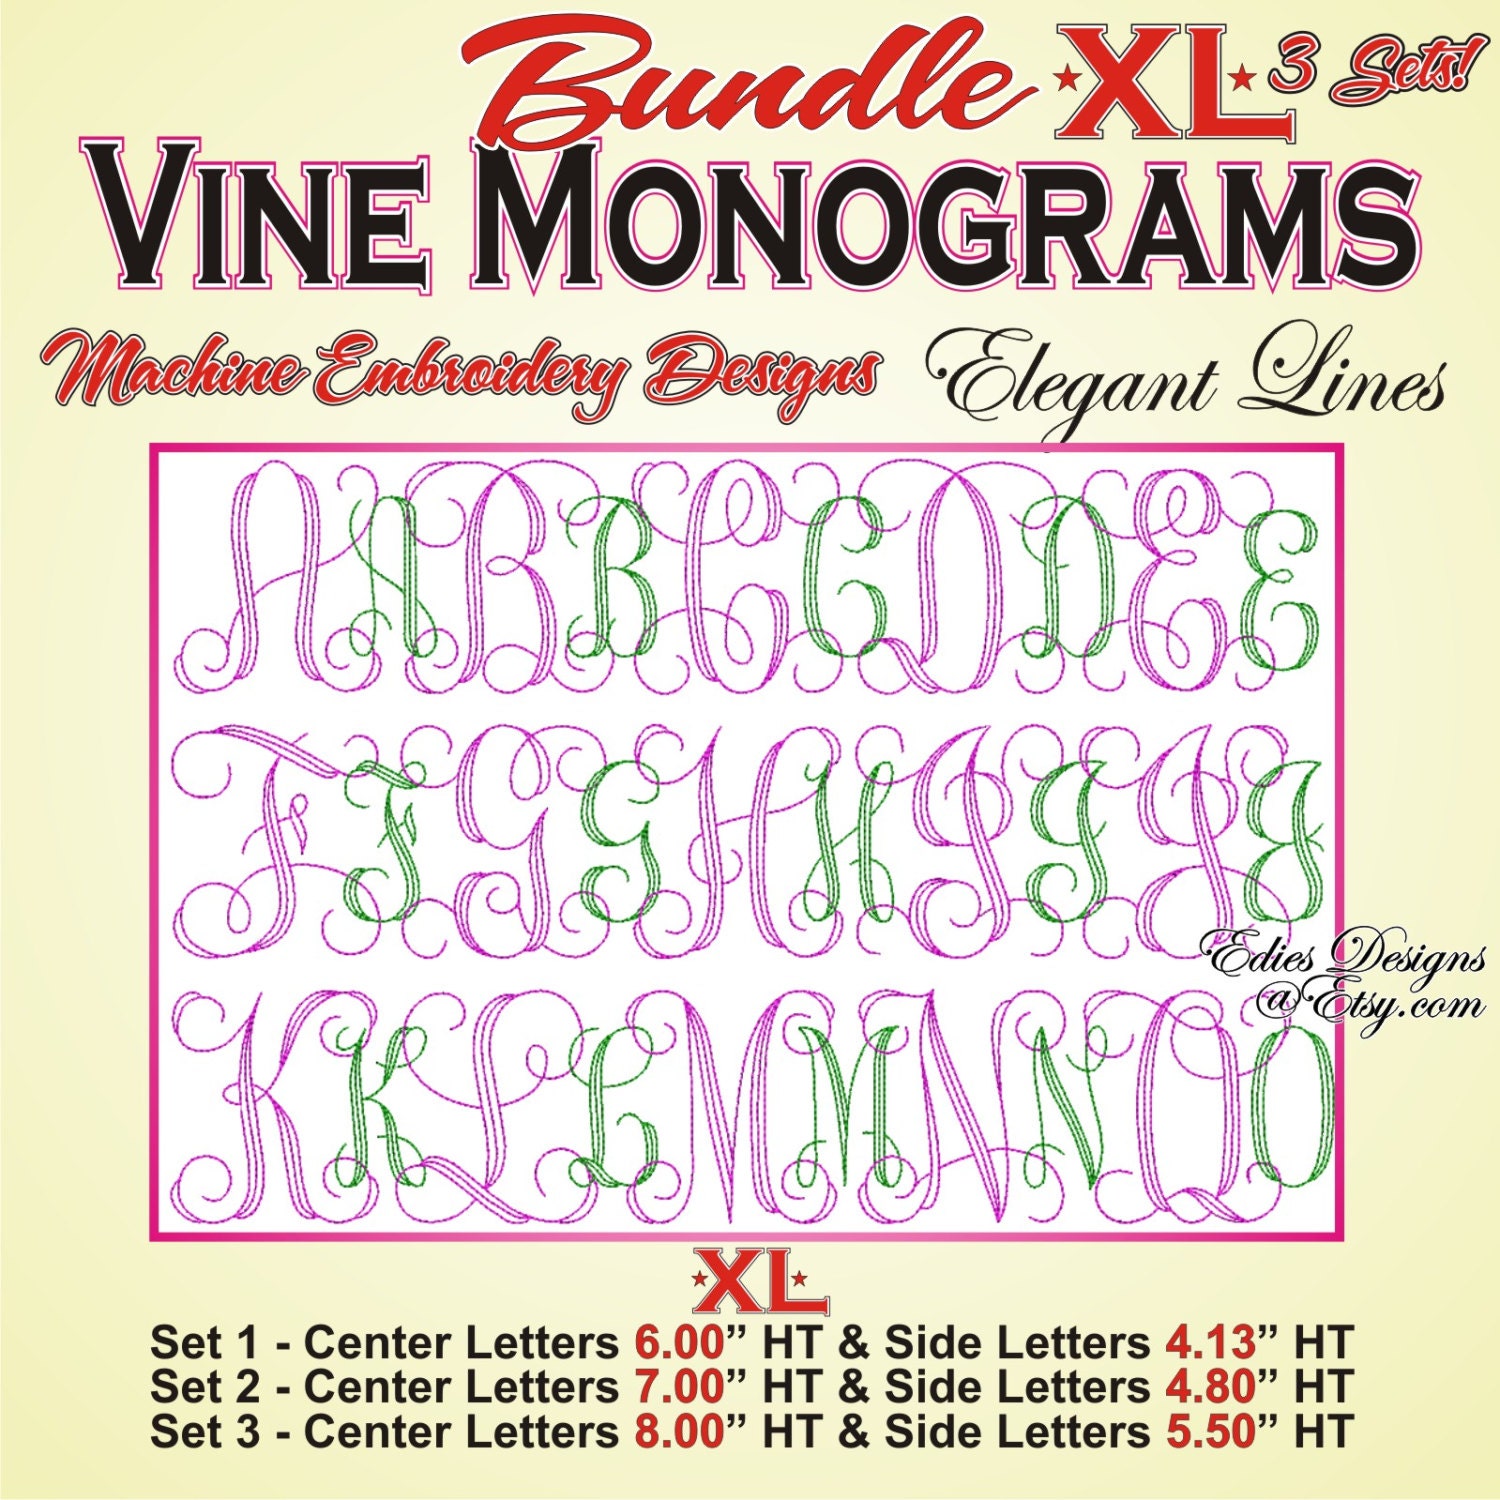 Vine Monograms Elegants Lines BUNDLE XL Monogram Font